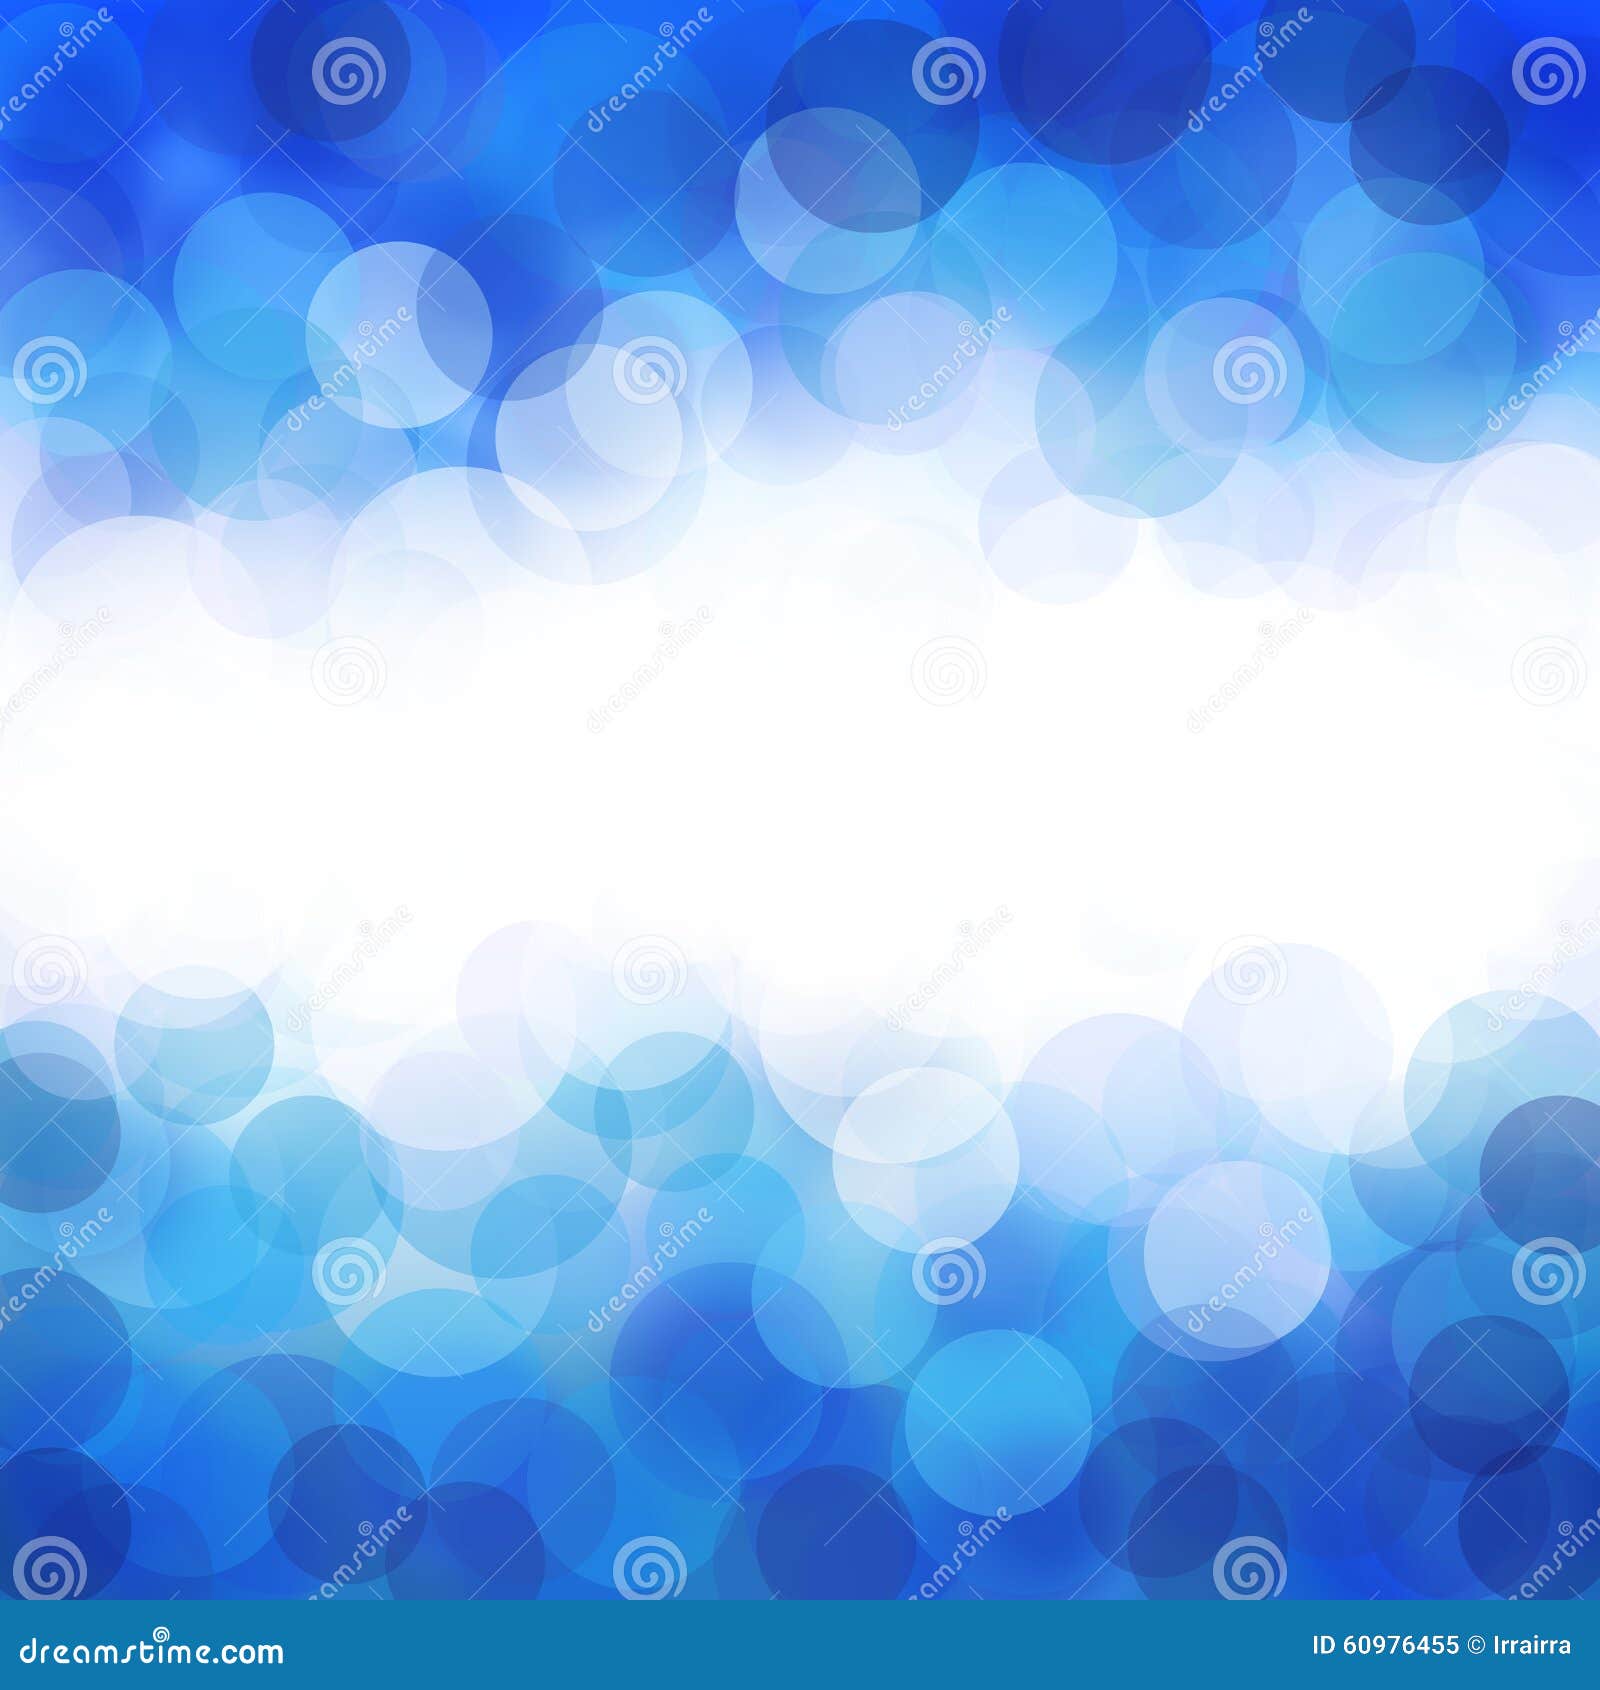 Blue and white background stock illustration. Illustration of winter